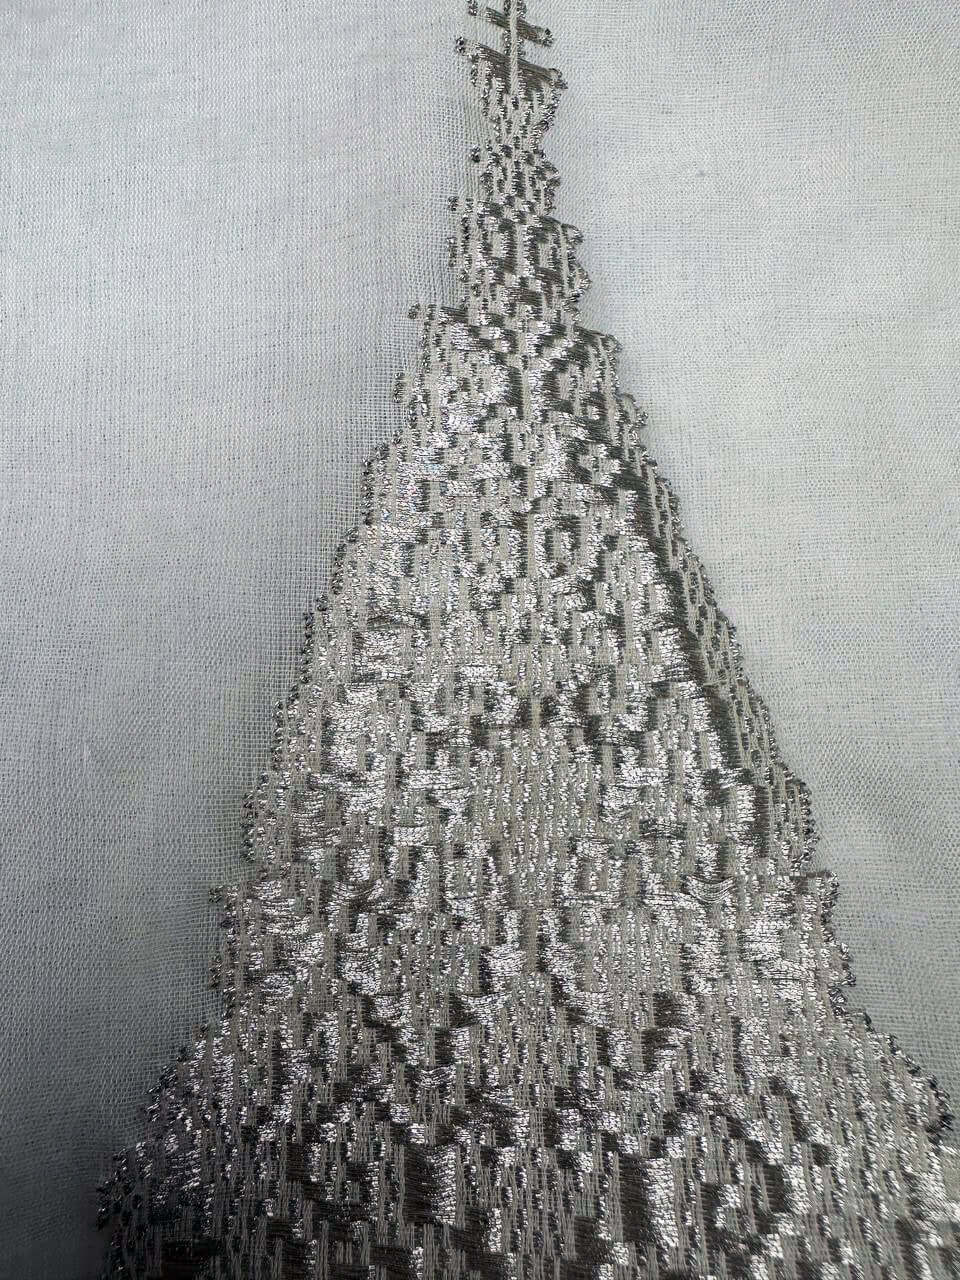 Ranee's Cloth (White & Silver)handwoven silk songket shawl textile